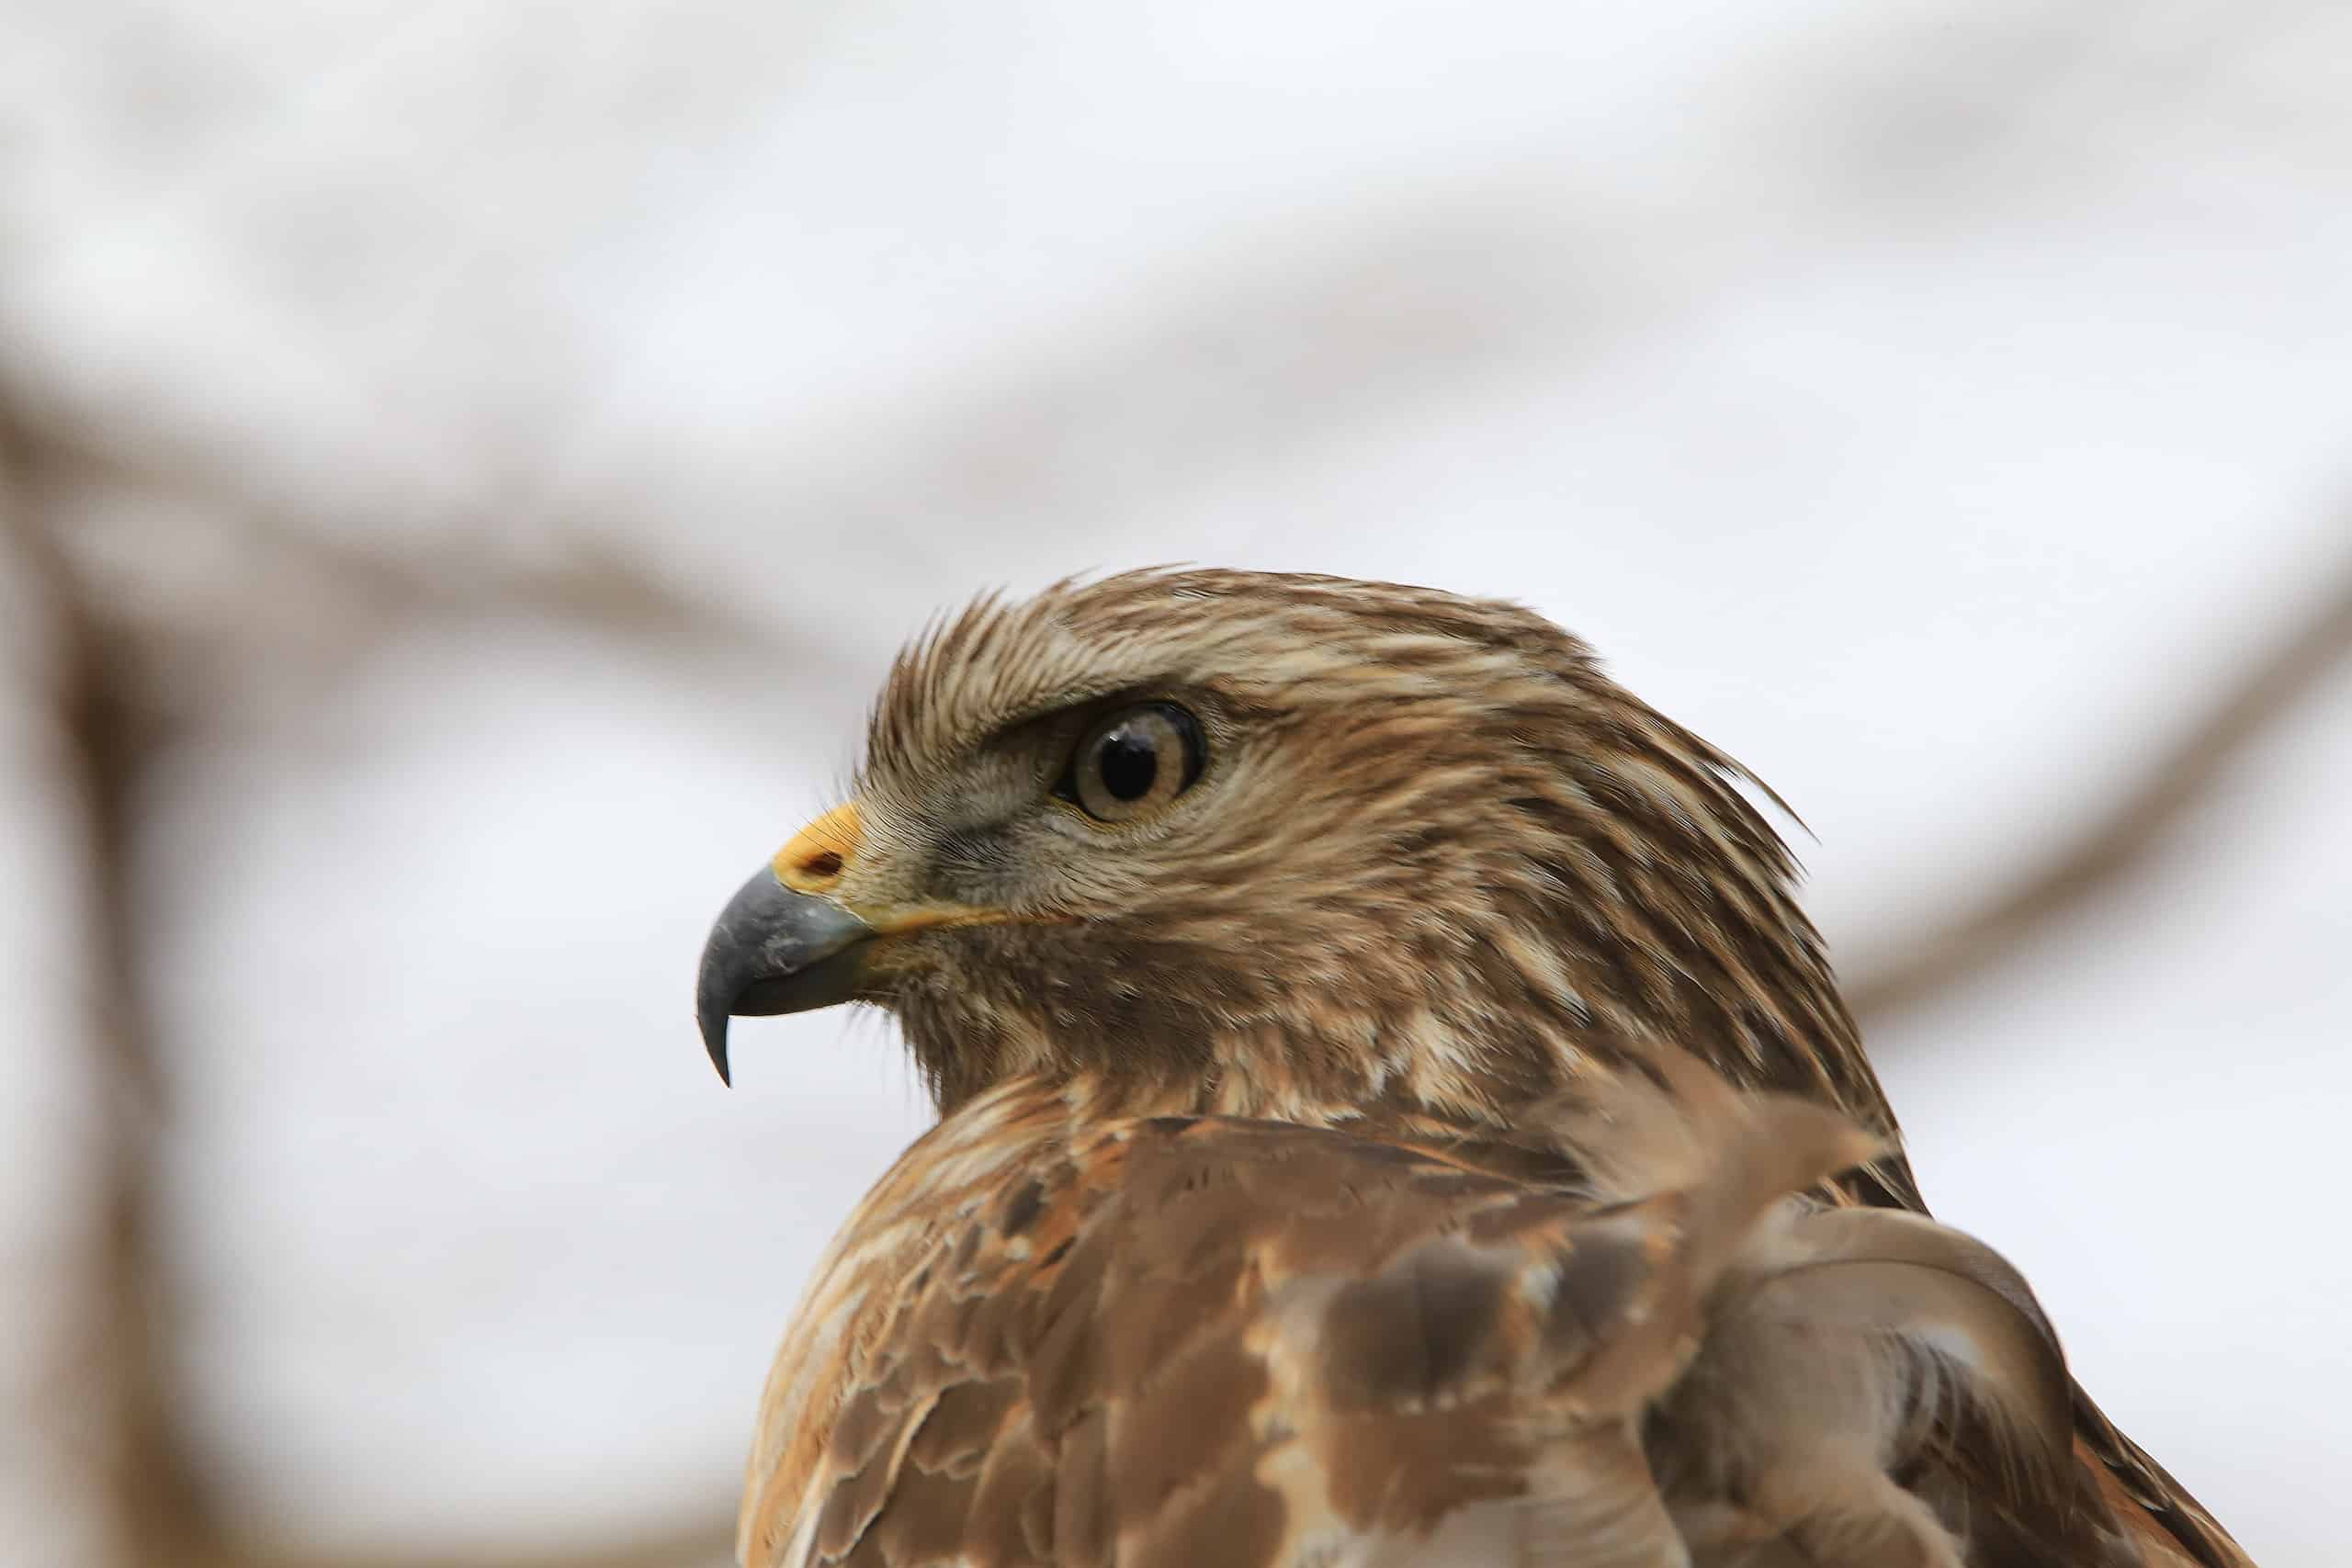 Closeup profile of a sharp-shinned hawk against a blurred background